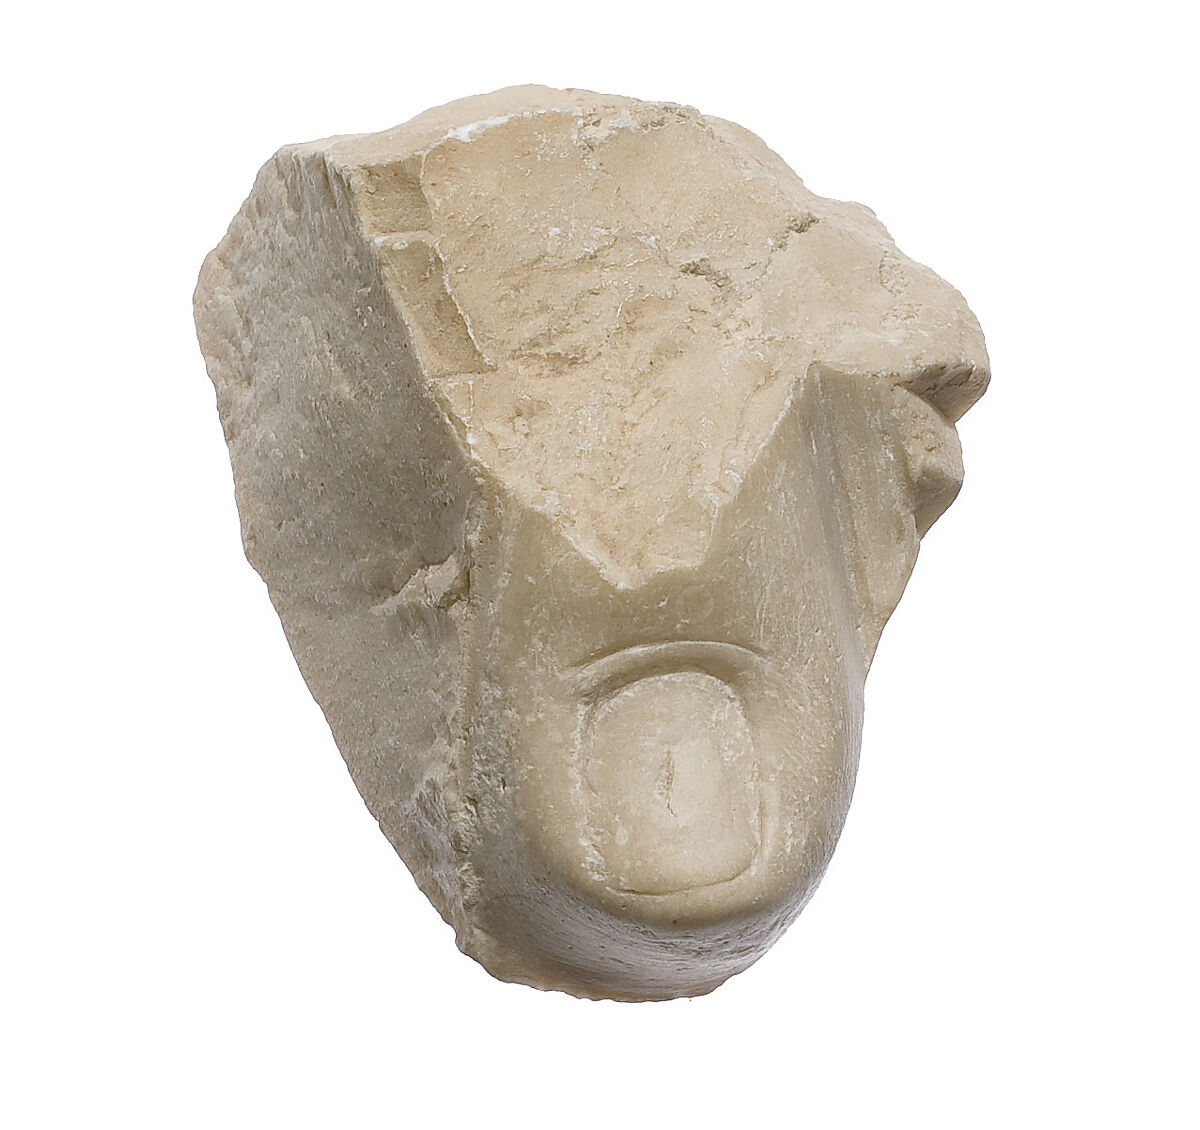 Toe of prostrate foot (?) of Akhenaten or Nefertiti, Indurated limestone 